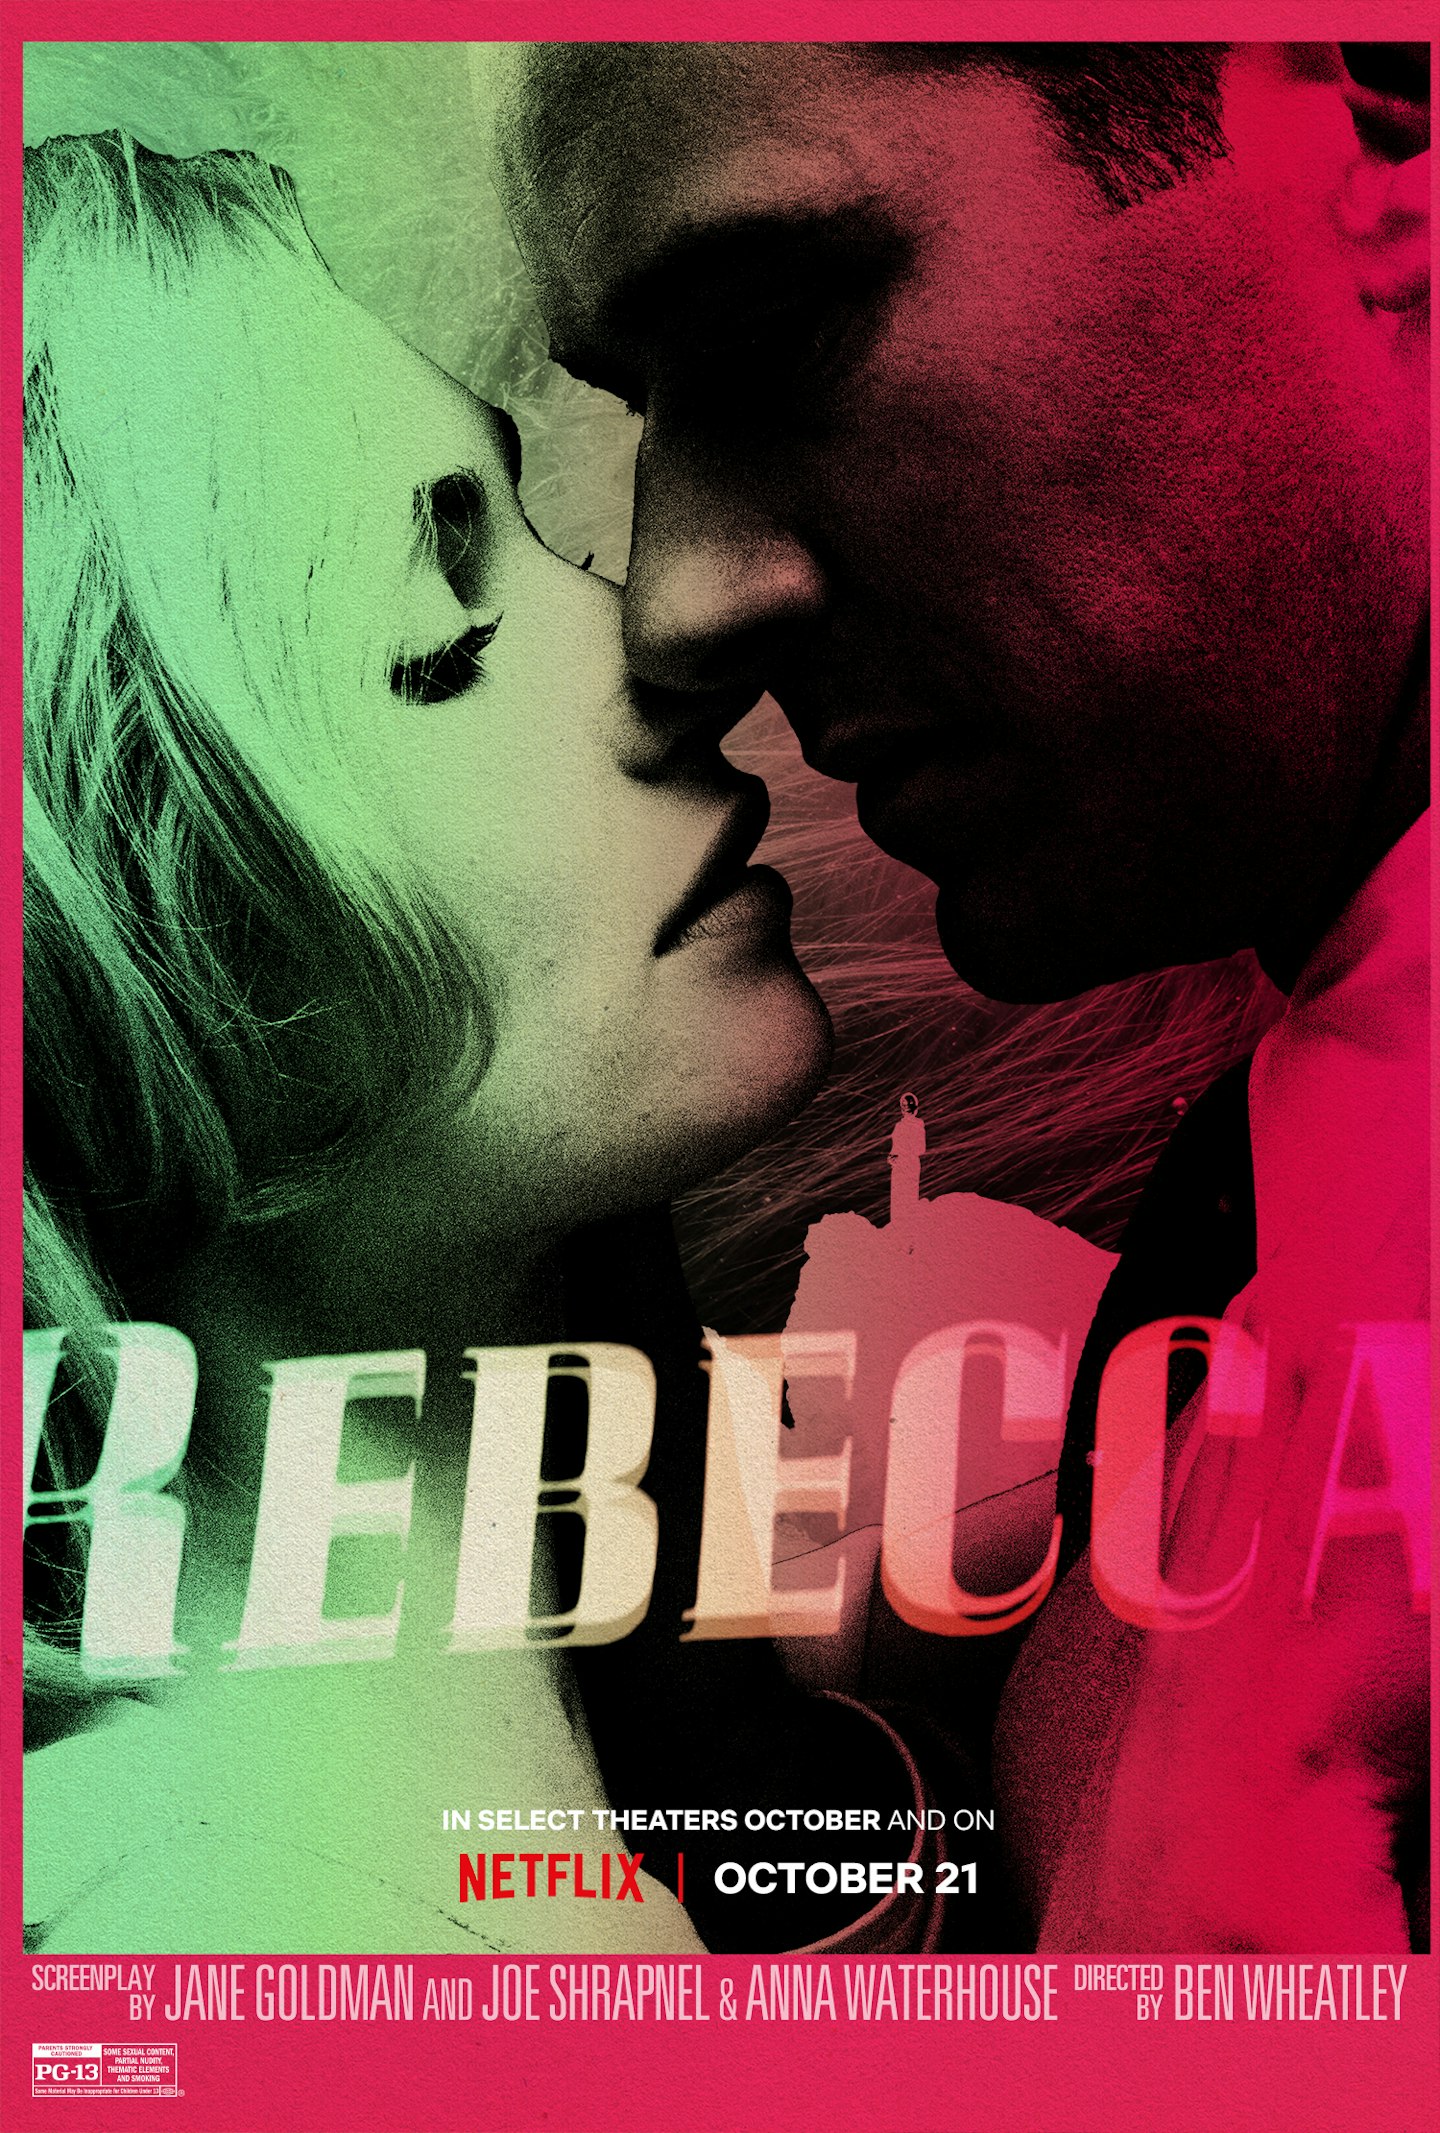 Rebecca – exclusive book art